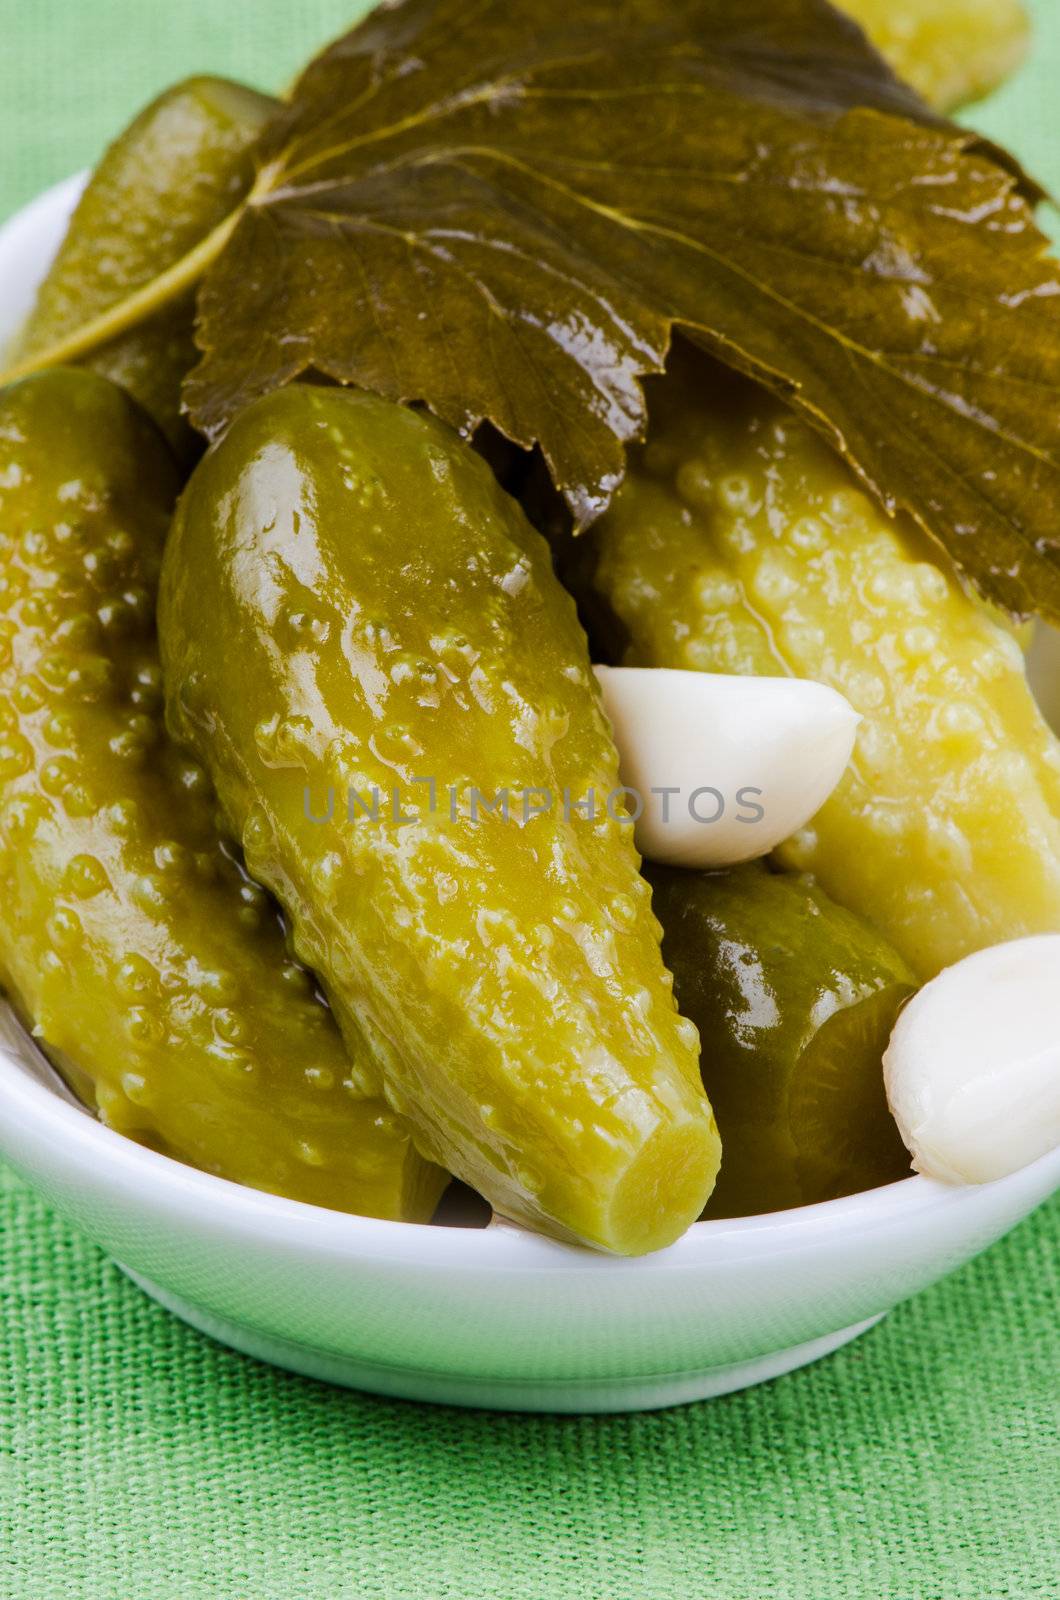 Pickles in bowl on green napkin  by Nanisimova